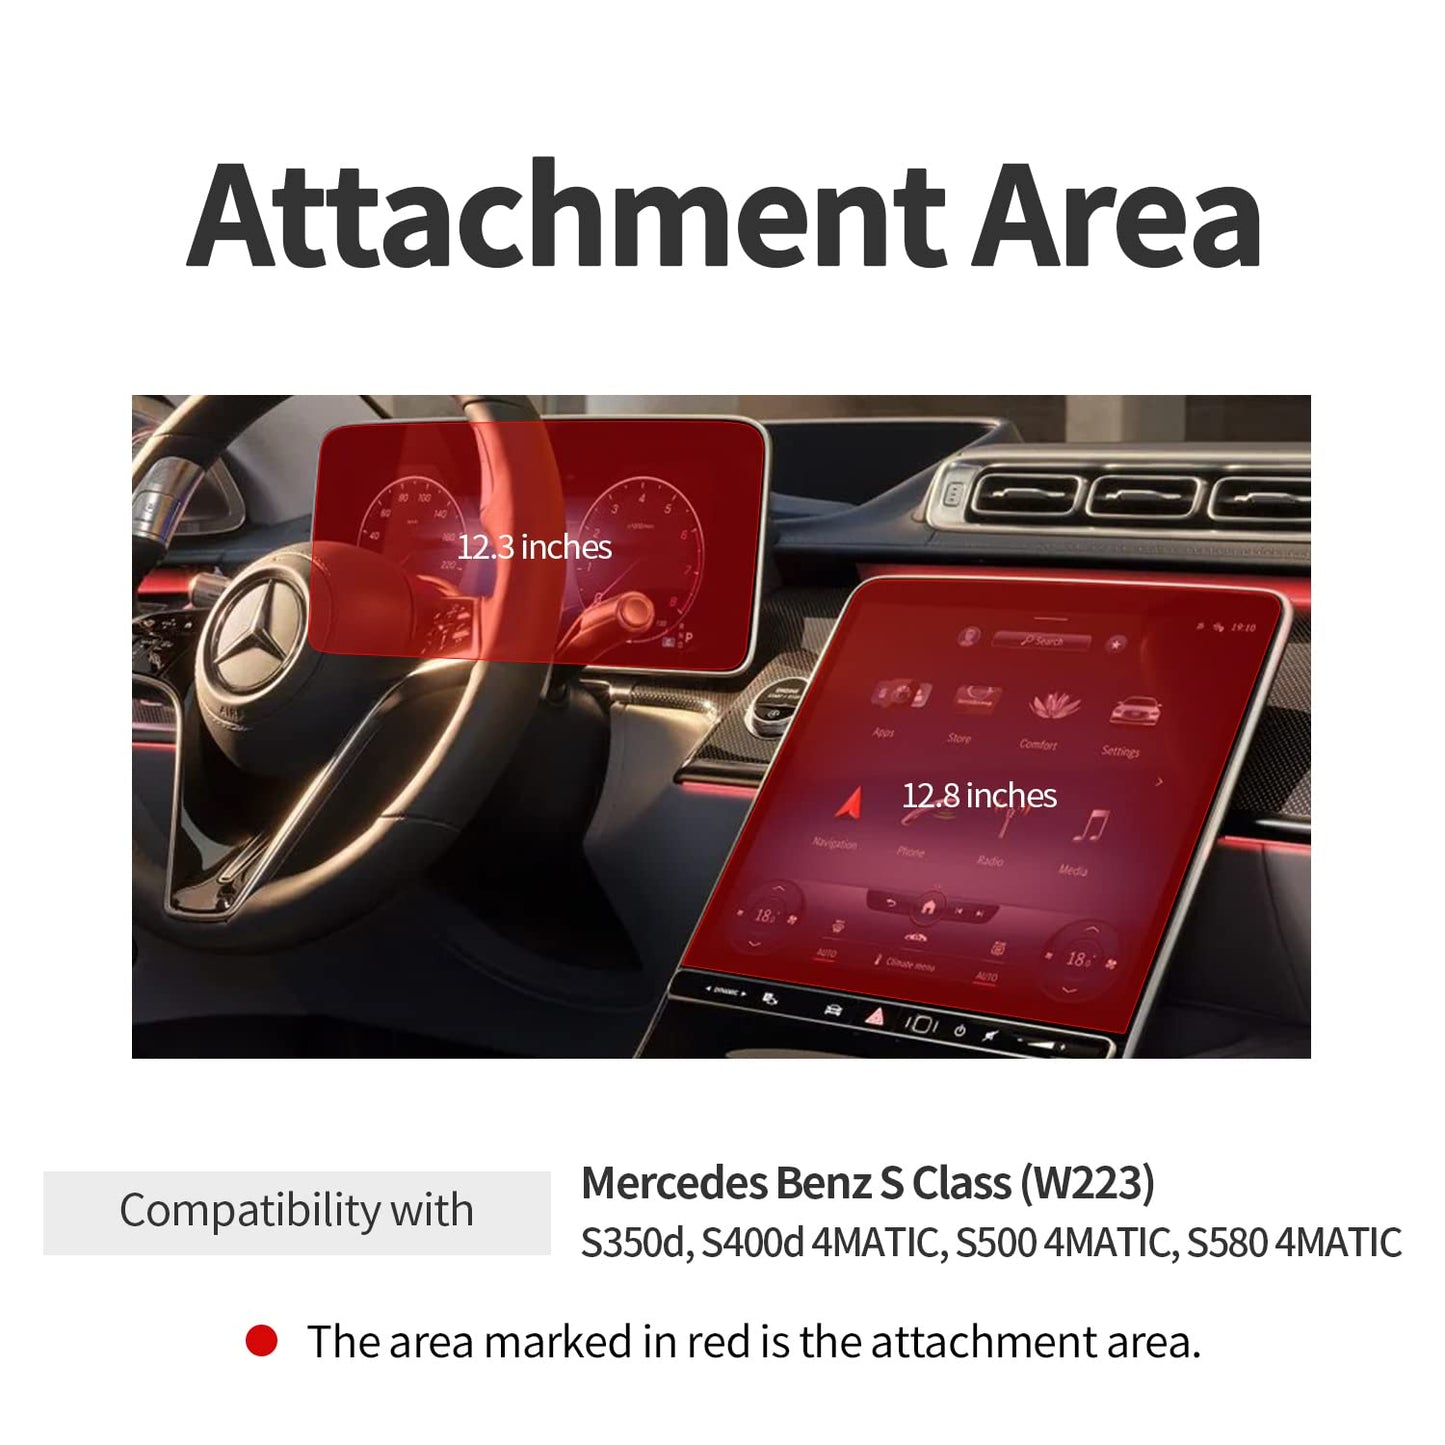 skoko [2+2 Pack] Anti-Glare Center Screen Protector Compatible with Mercedes Benz S Class w223, S350d, S300d, S500, S580,  Anti-Glare Matte, Anti Fingerprints, Soft Feeling